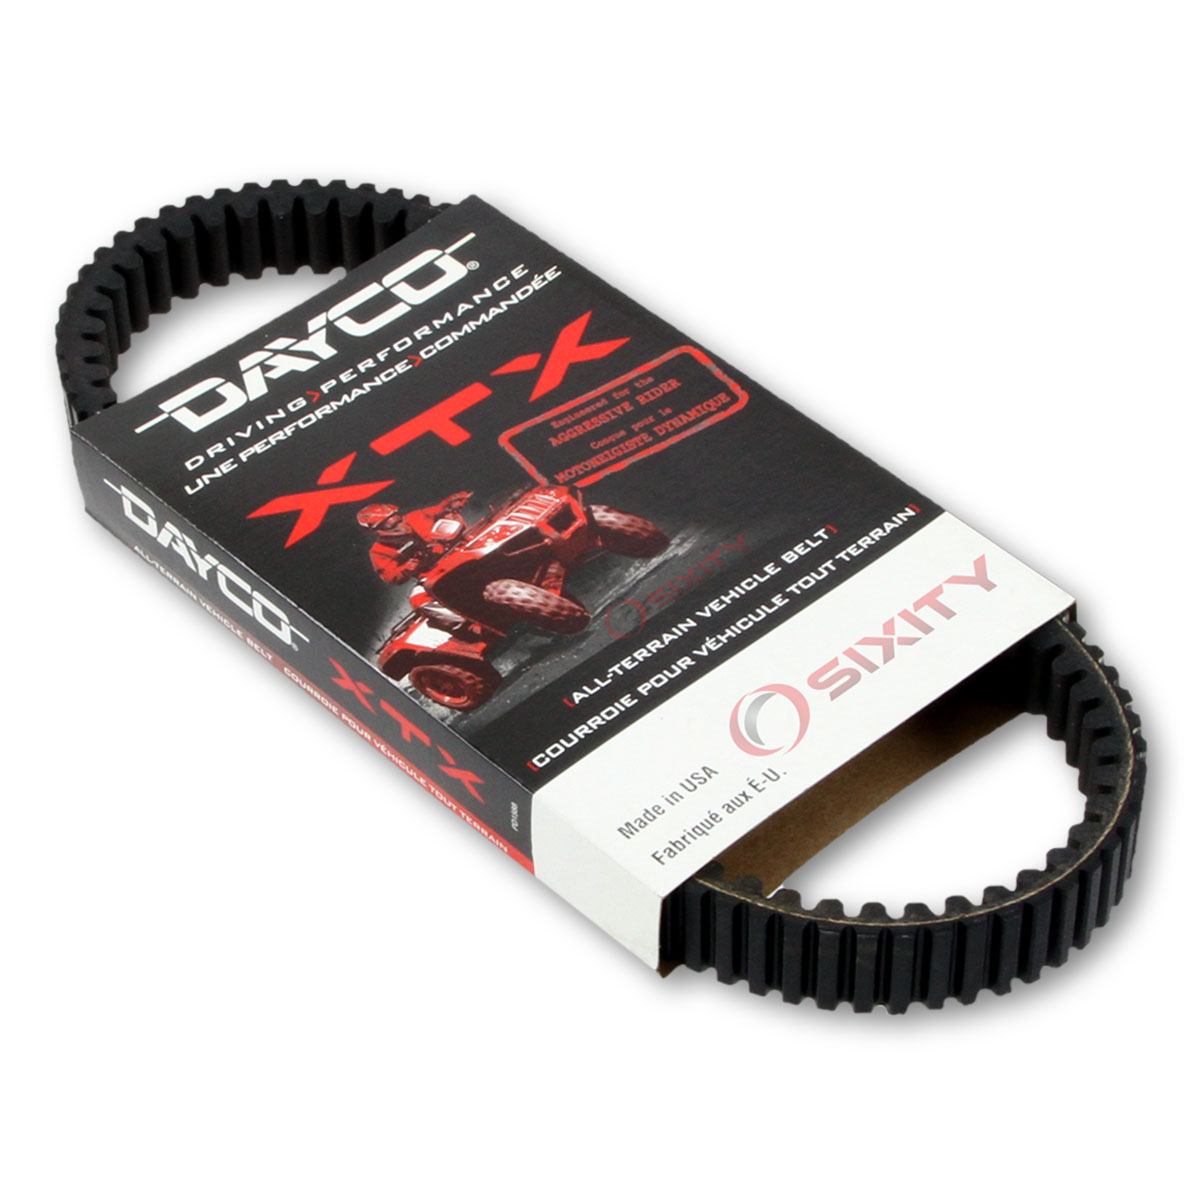 Dayco XTX Drive Belt for 2012-2013 Arctic Cat 550i LTD - Extreme Torque CVT